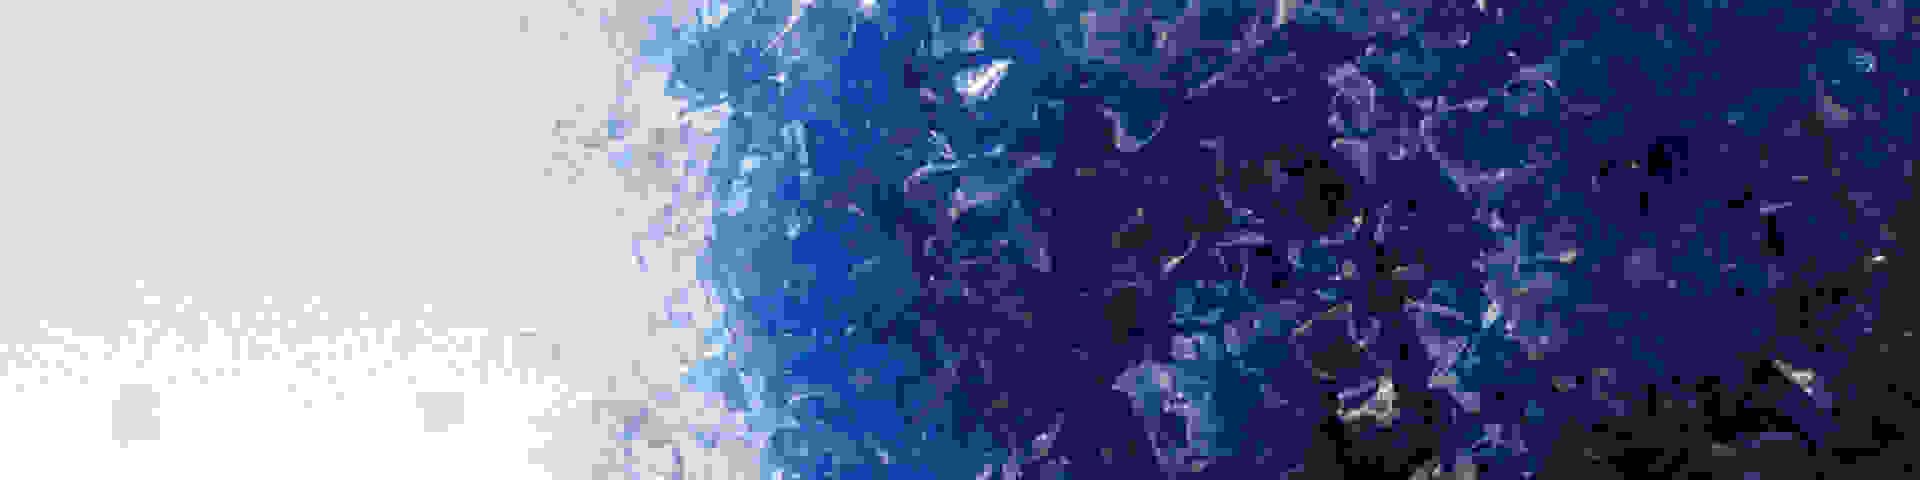 An image of blue microplastics